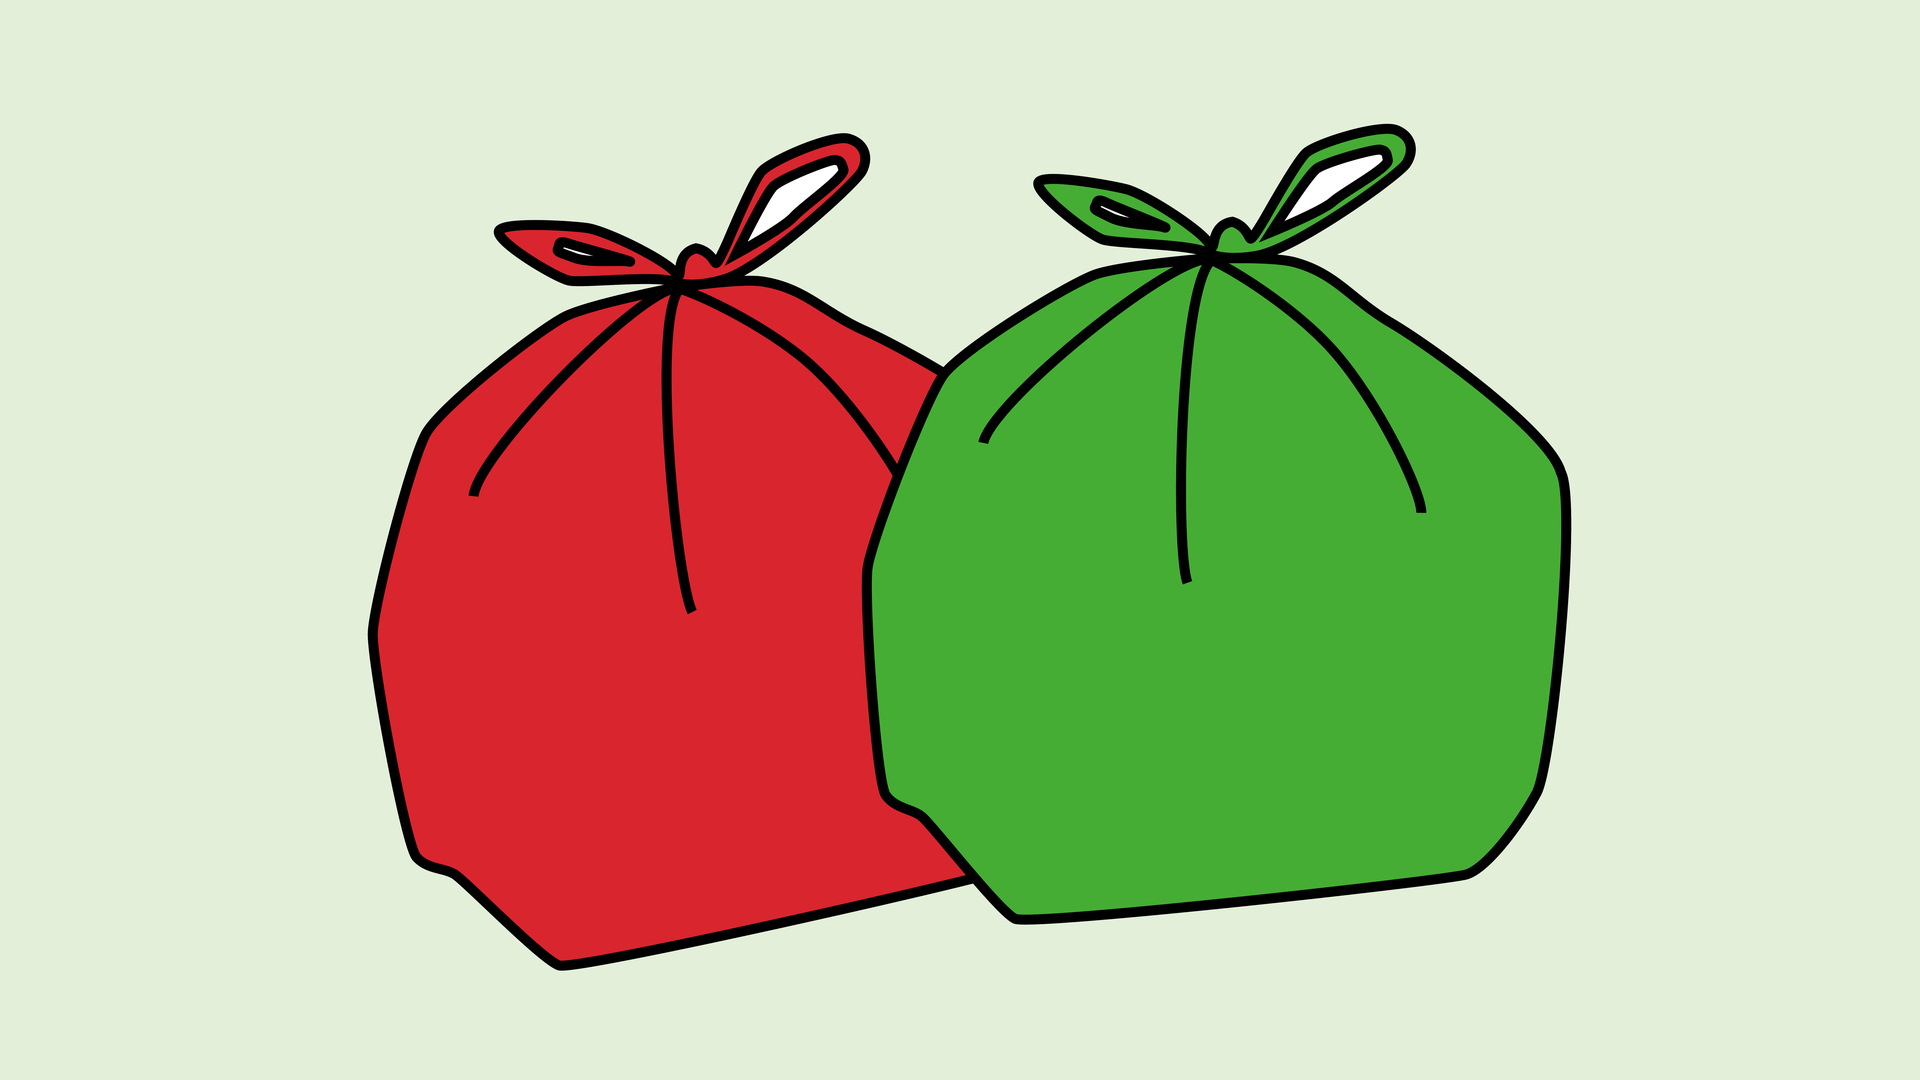 En röd och en grön soppåse